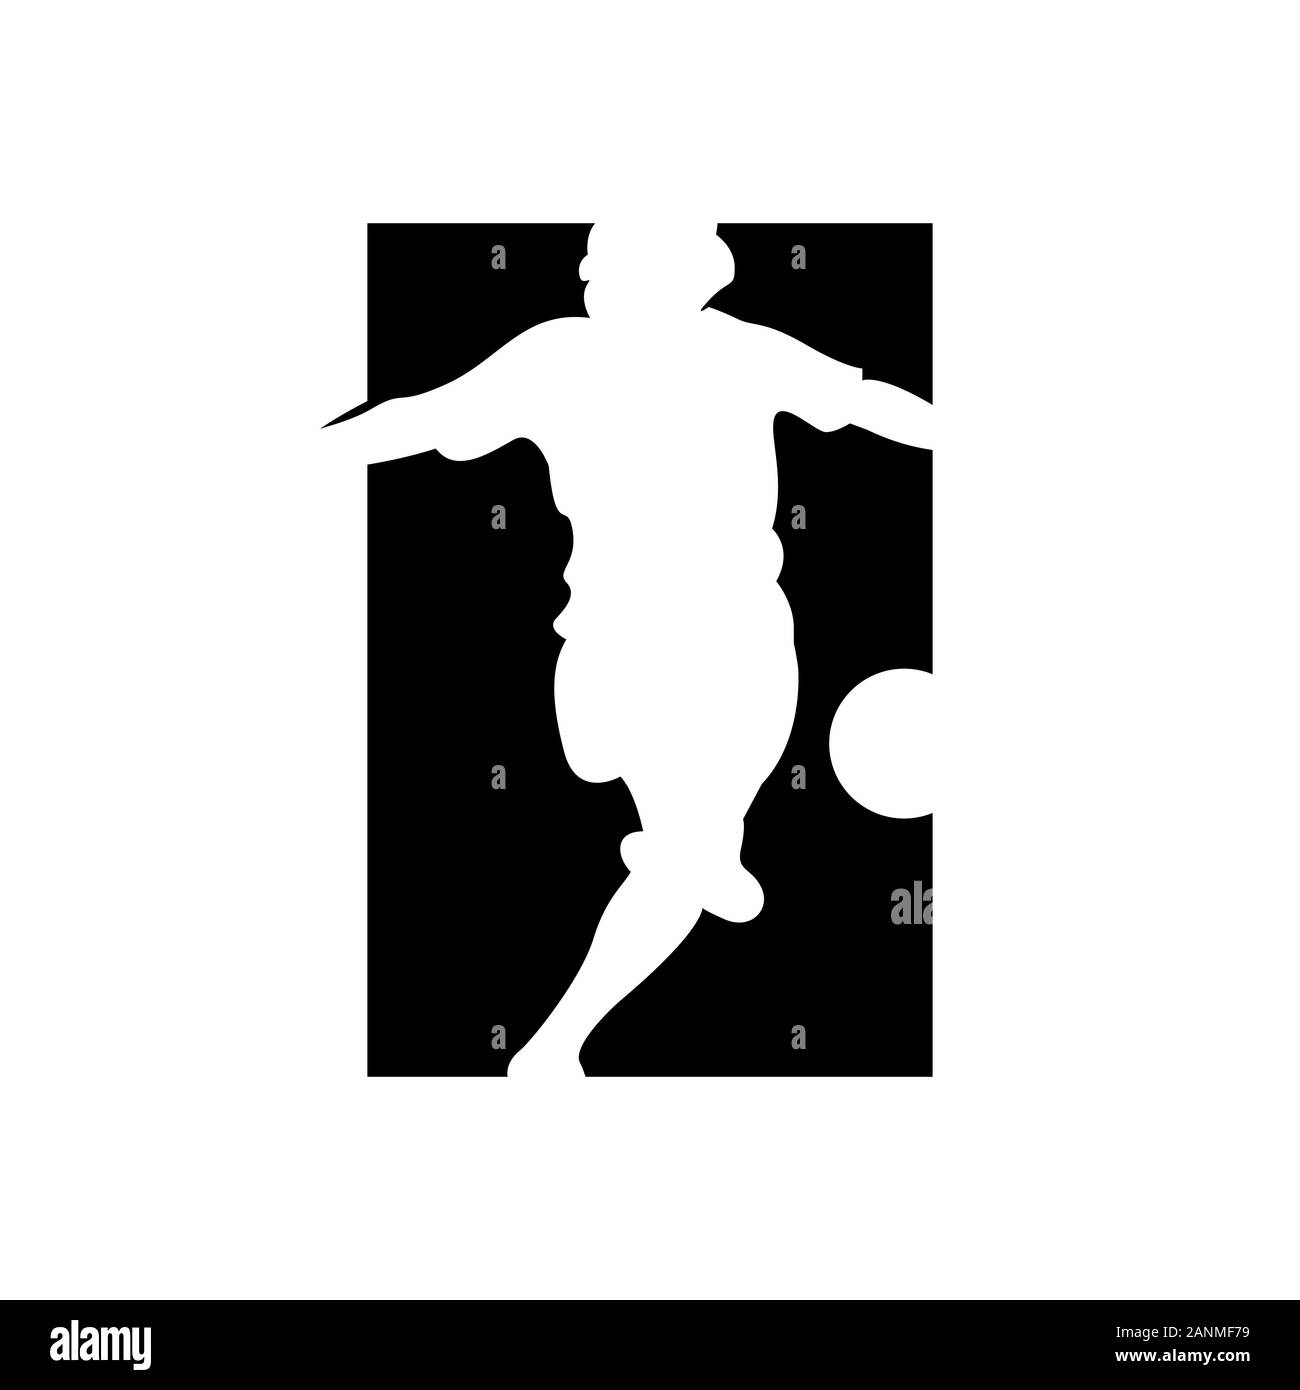 shoot kicking ball logo for brand of football soccer player logo designs Stock Vector